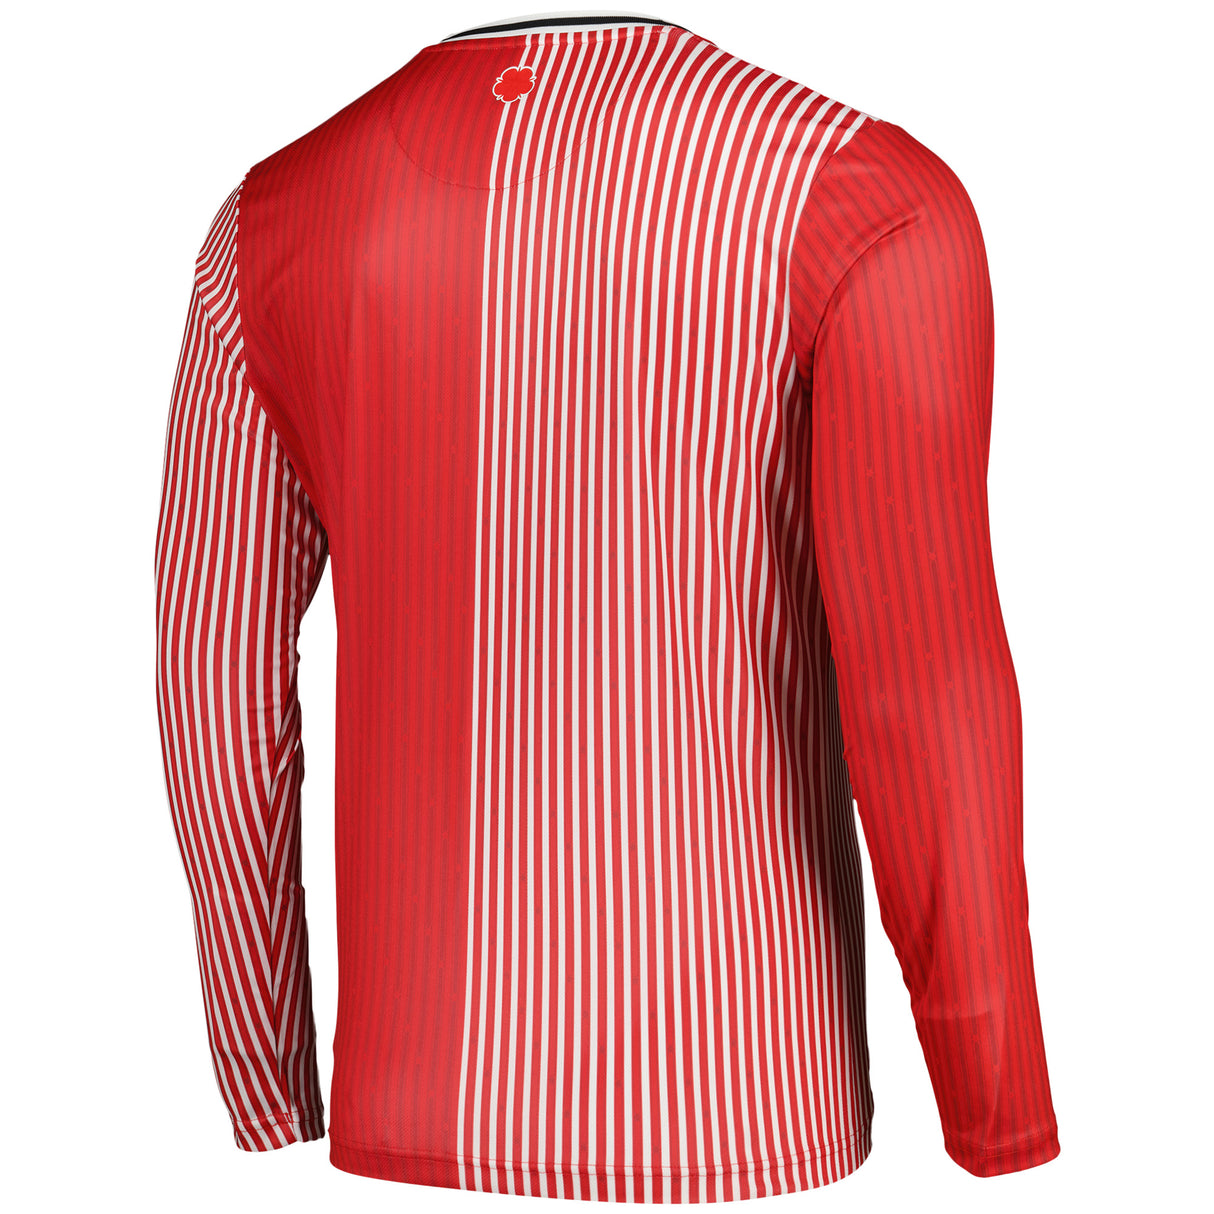 Southampton Home Shirt 2023-24 - Long Sleeve - Kit Captain